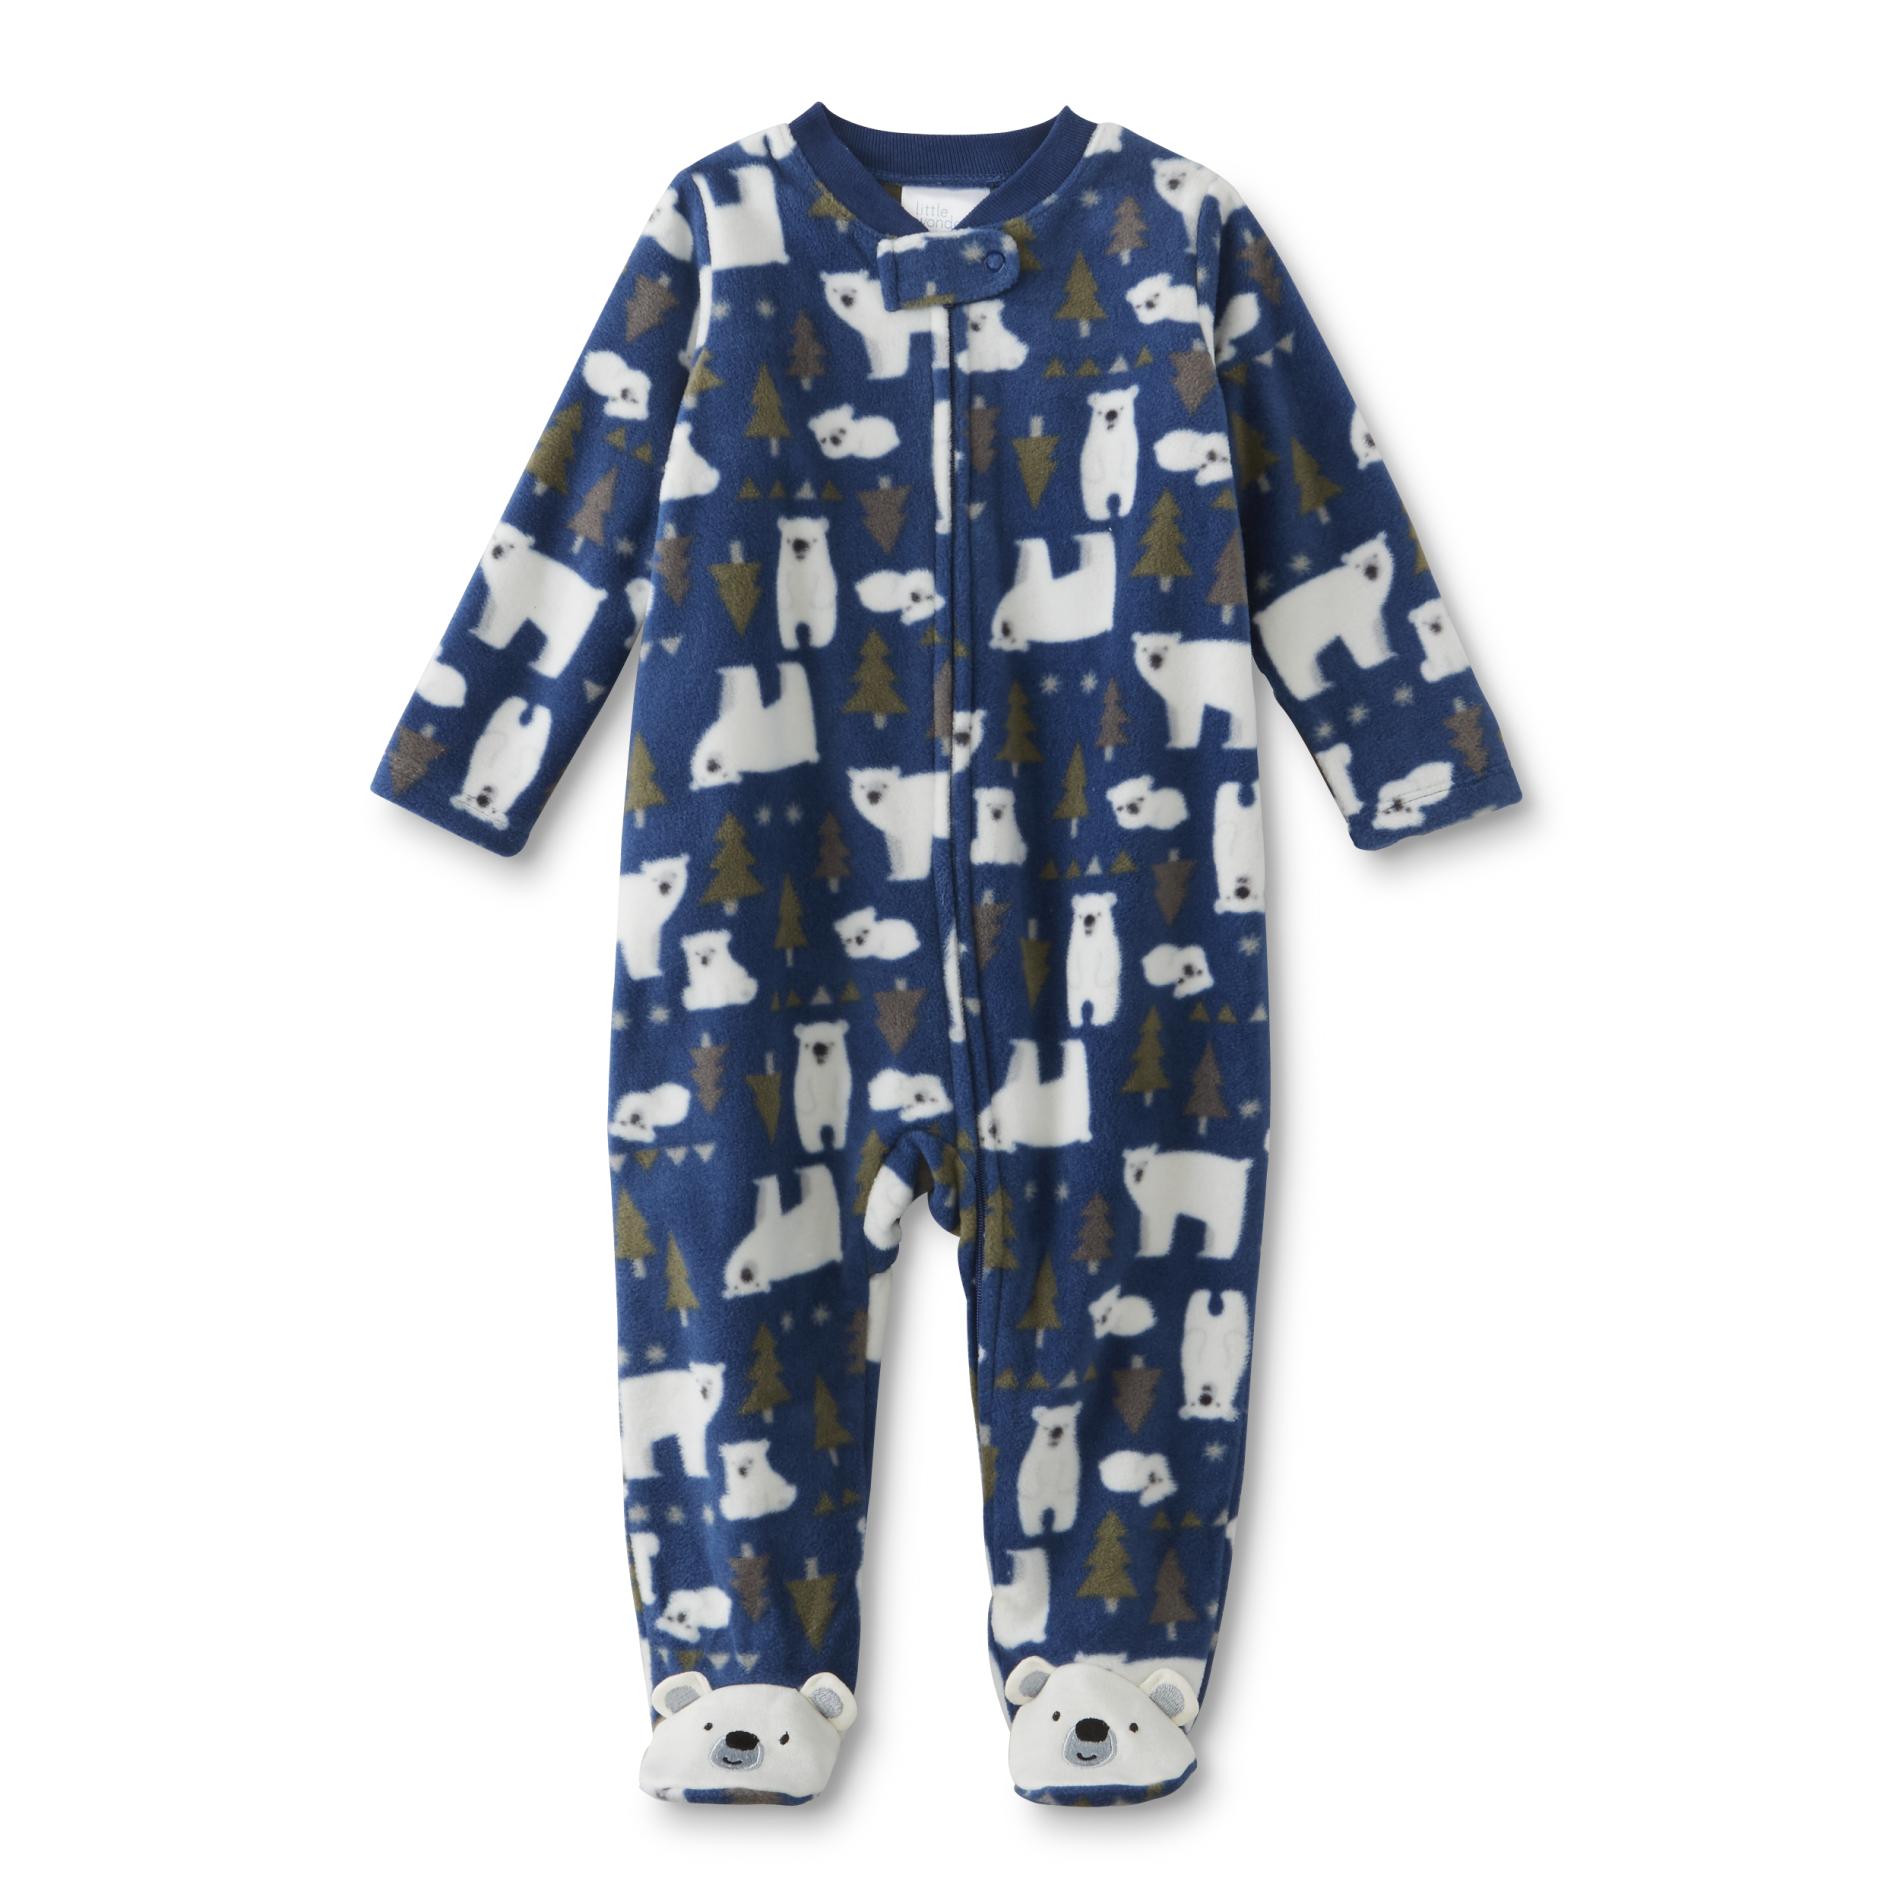 Little Wonders Infant Boys' Fleece Sleeper Pajamas - Polar Bear